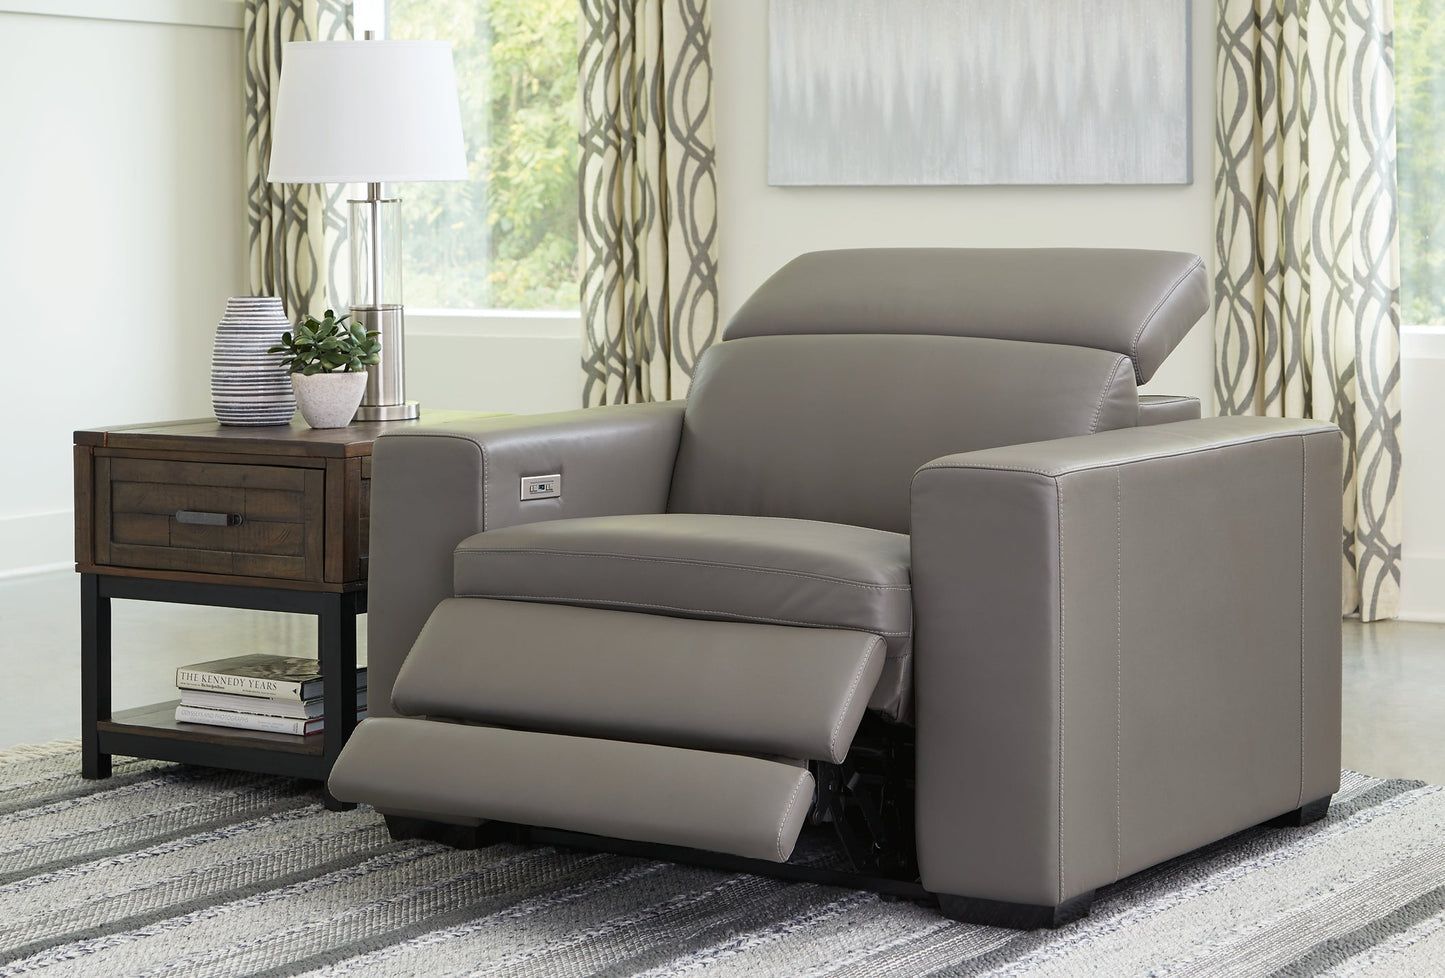 Texline PWR Recliner/ADJ Headrest at Cloud 9 Mattress & Furniture furniture, home furnishing, home decor